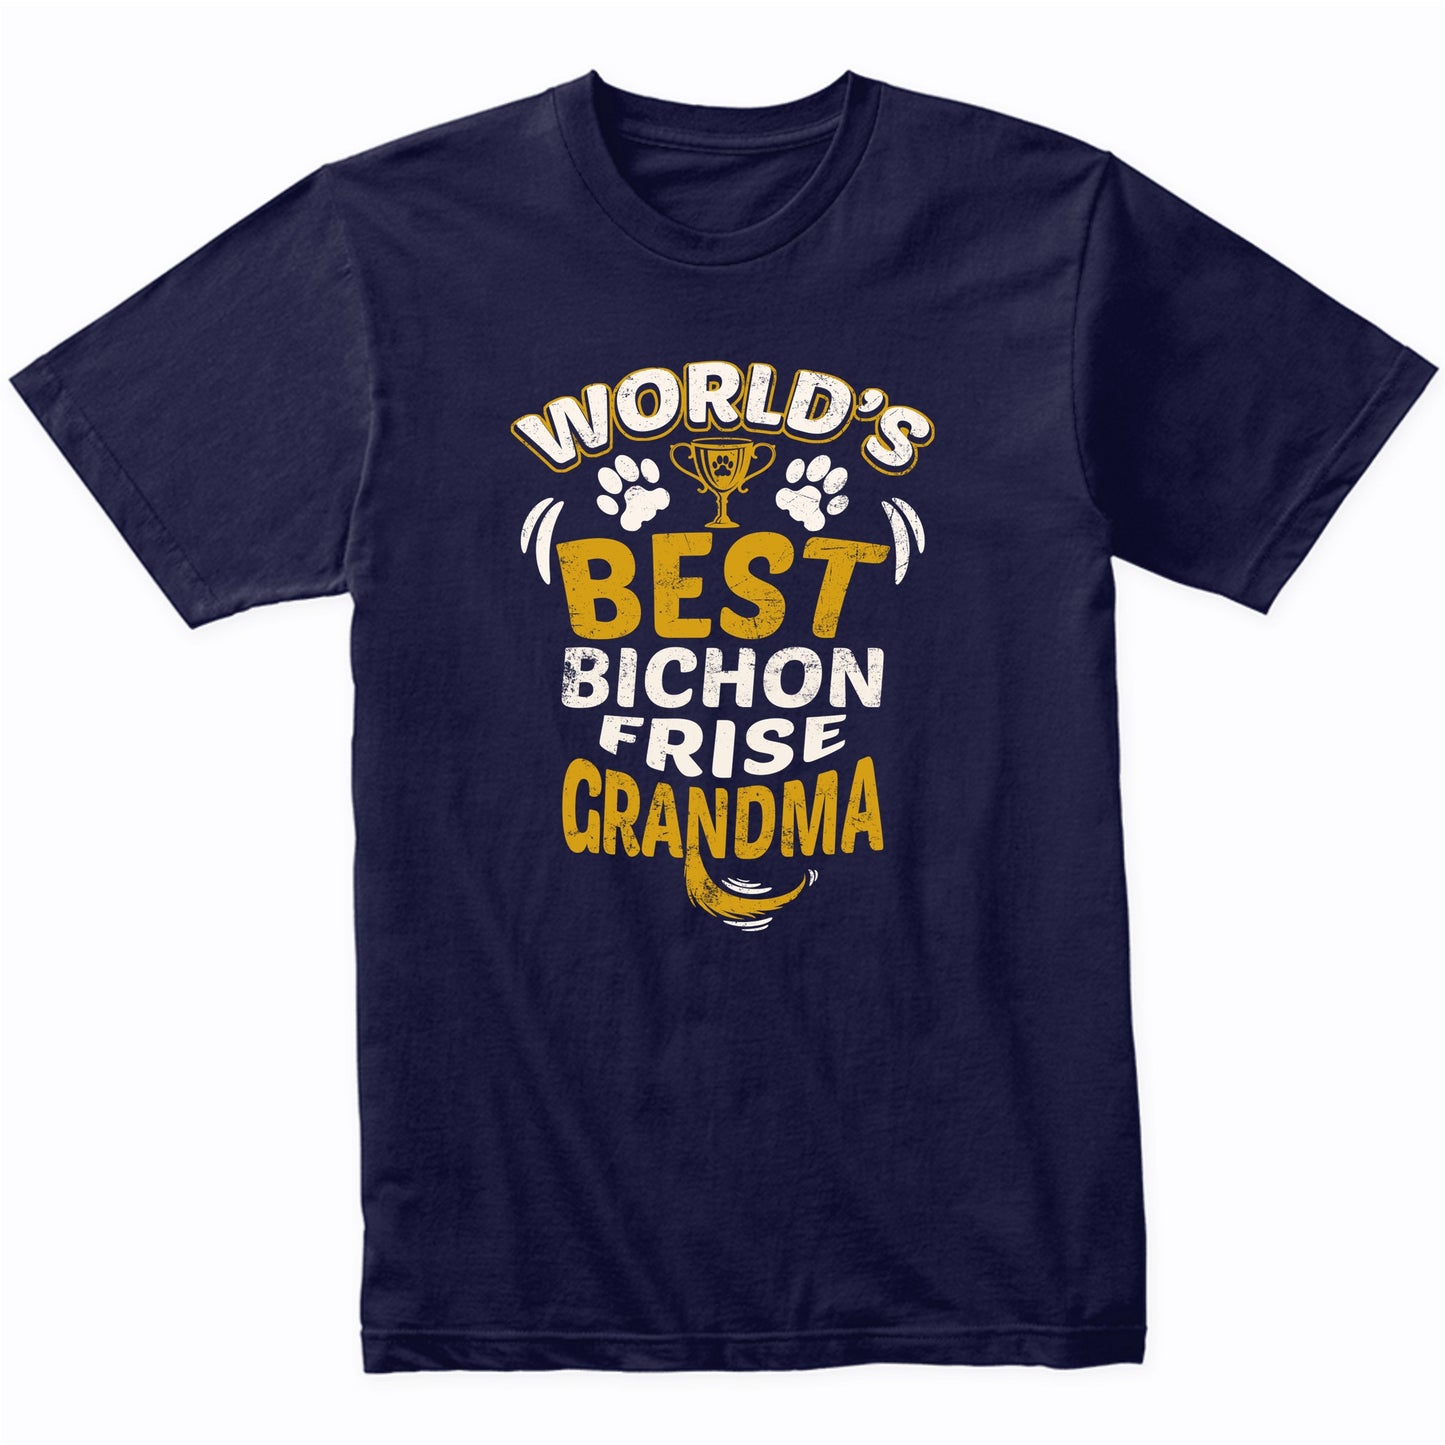 World's Best Bichon Frise Grandma Graphic T-Shirt